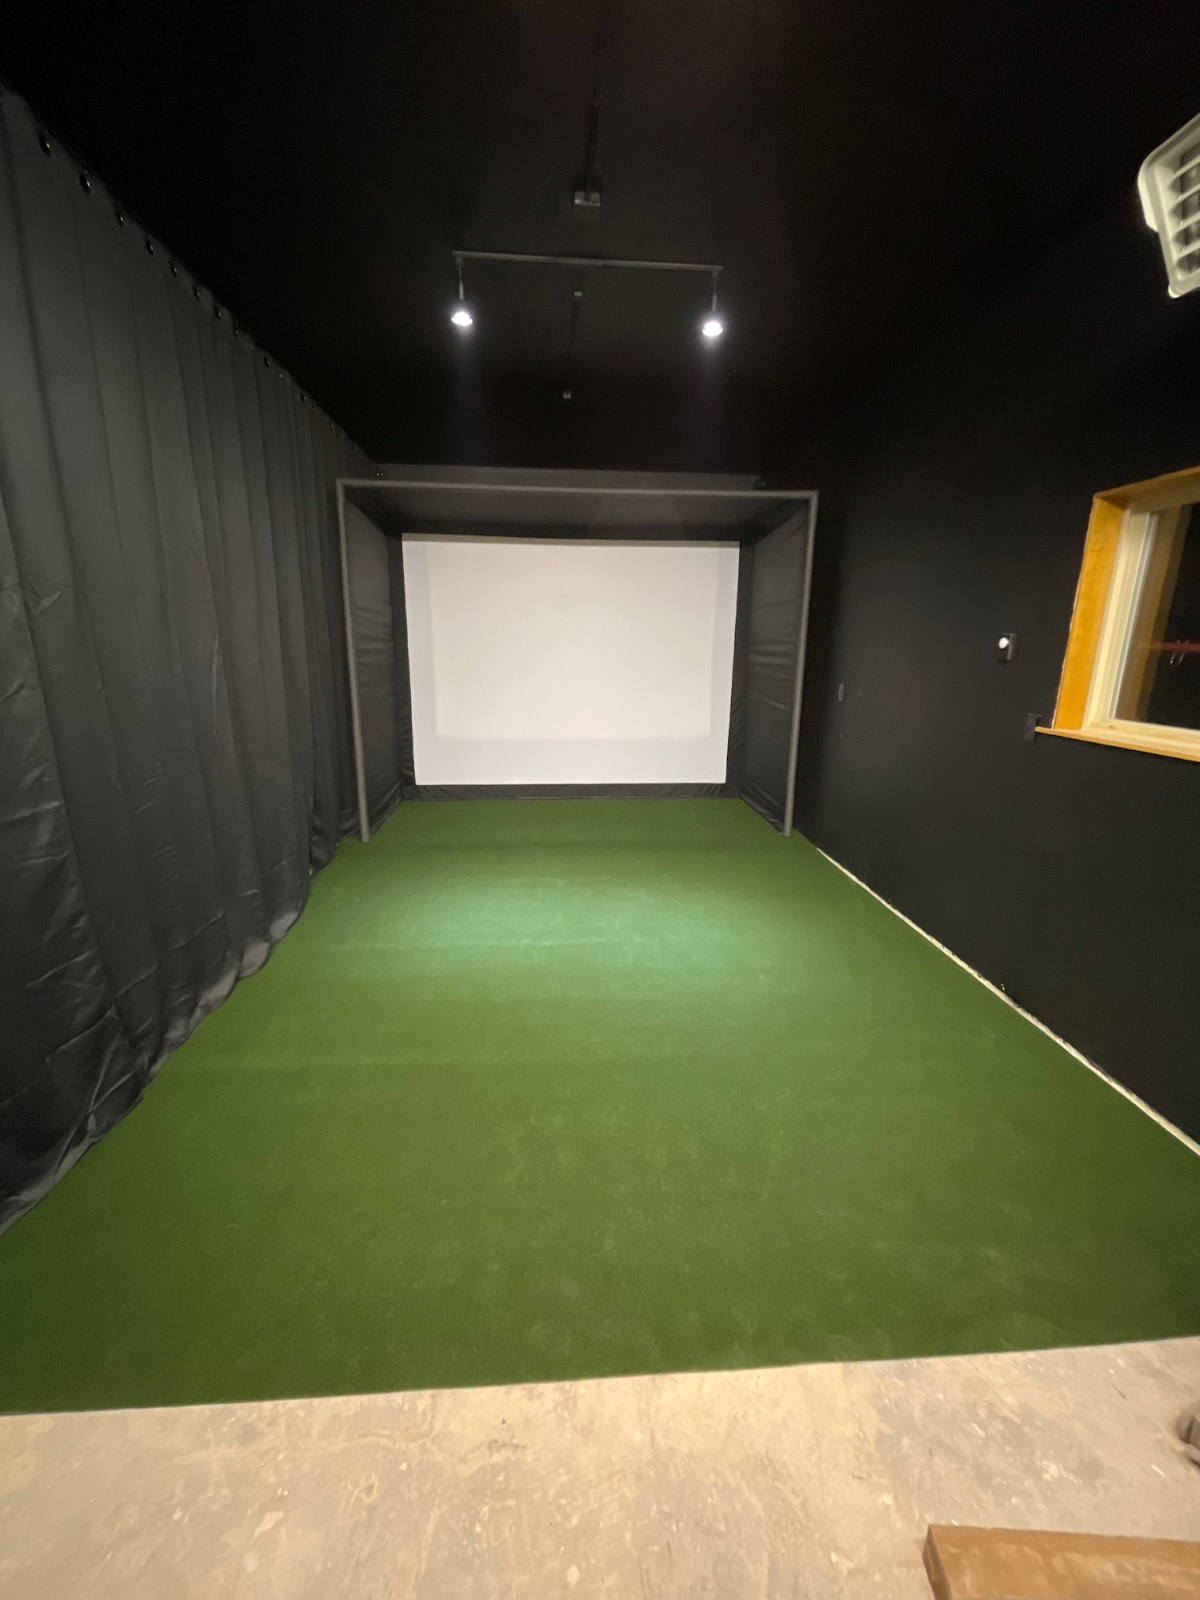 DIY home golf simulator setup